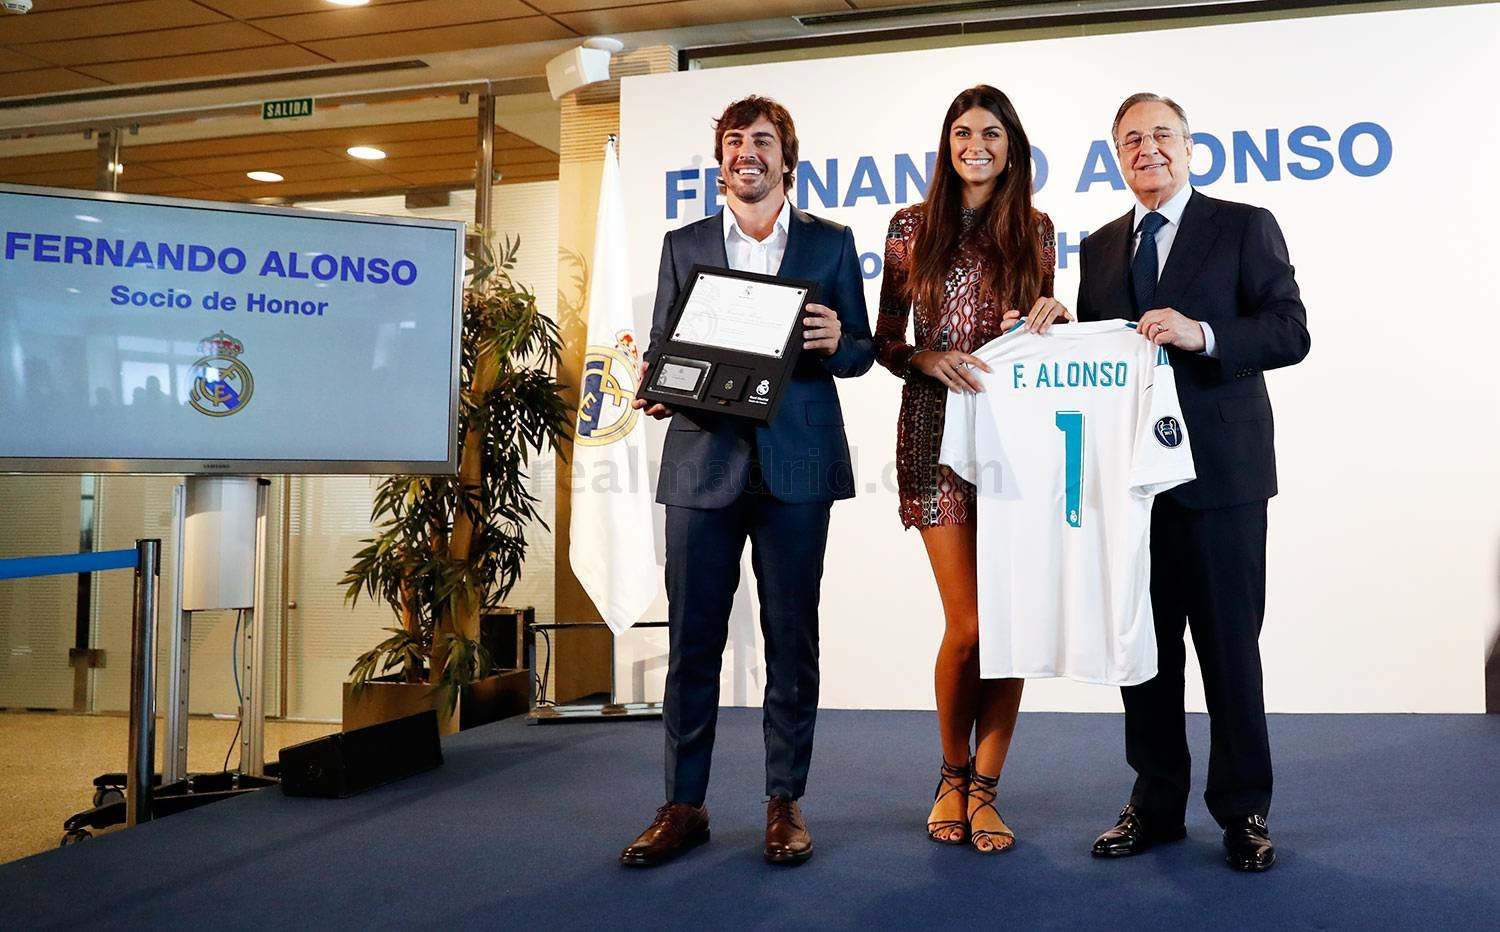 Fernando Alonso, acompañado por Linda Morselli y Florentino Pérez